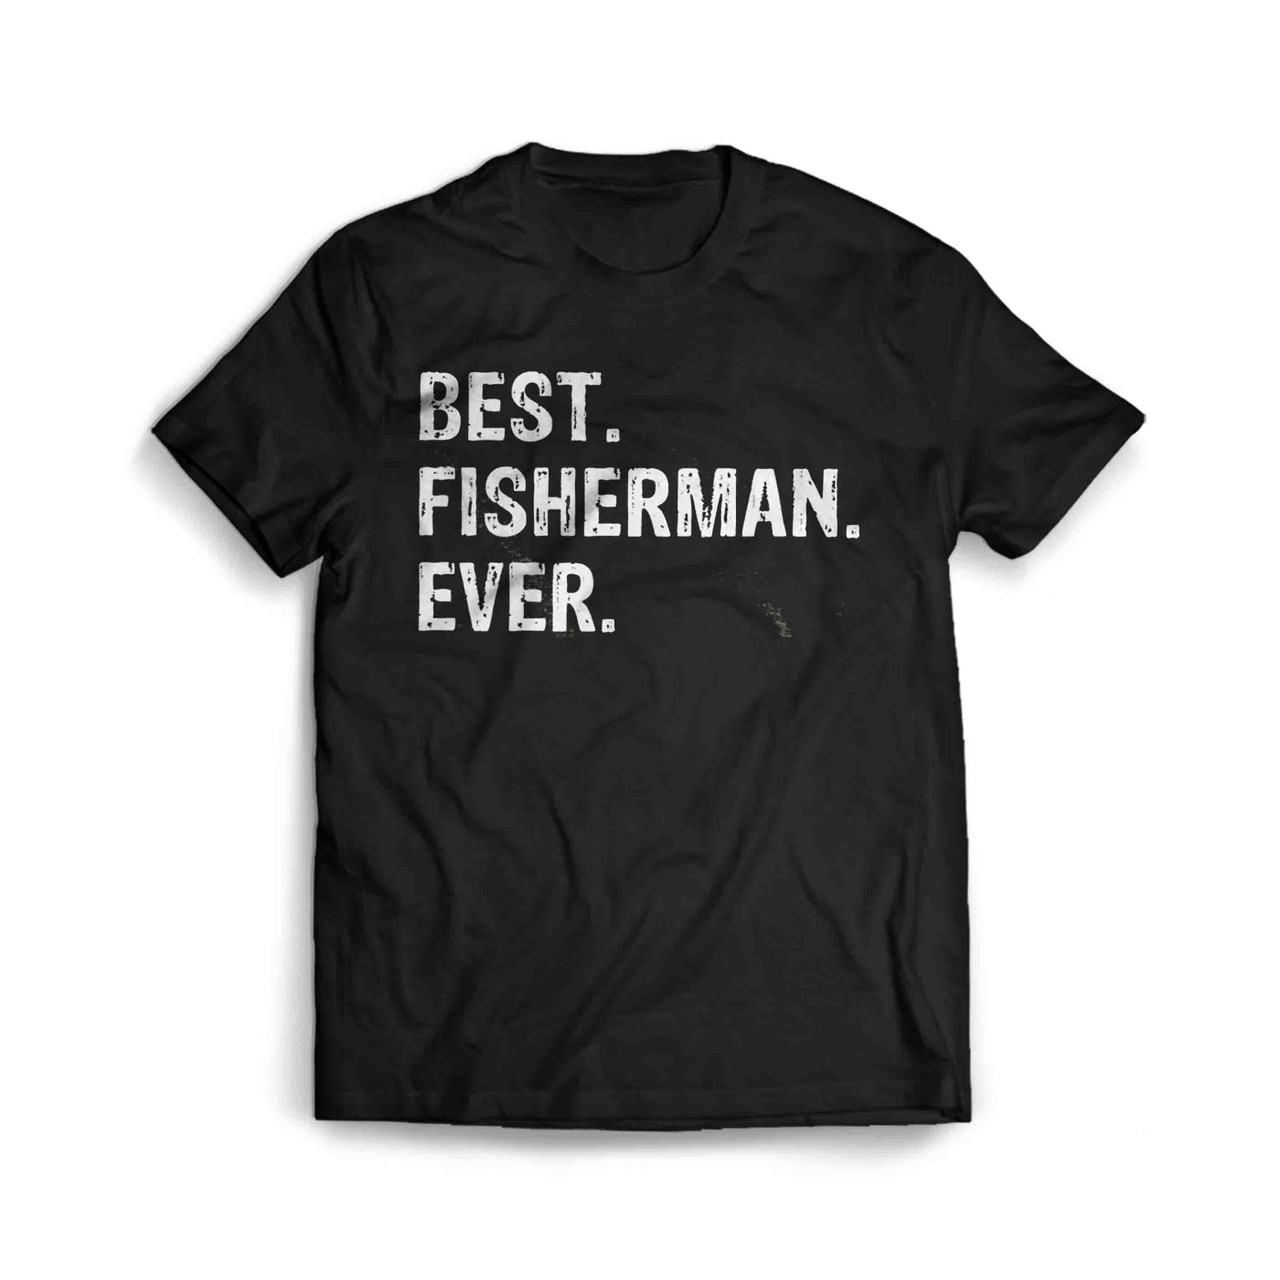 Funny Fishing, Funny Men's T-Shirt - Black - Available in all sizes | Fishing - Funny Fishing Joke